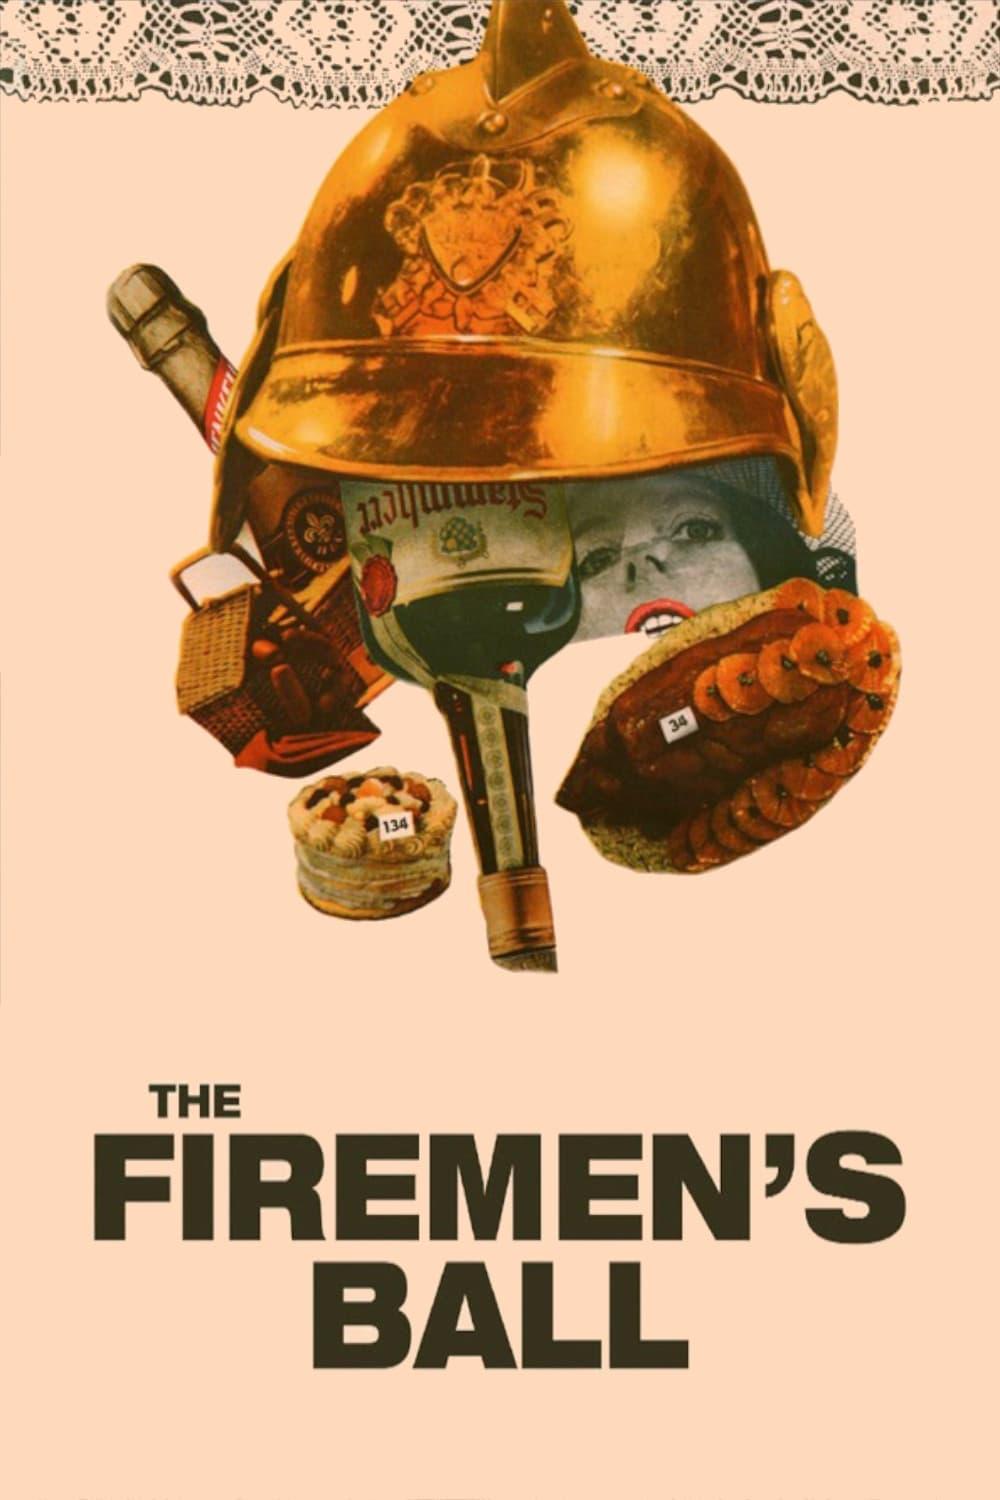 The Firemen's Ball poster